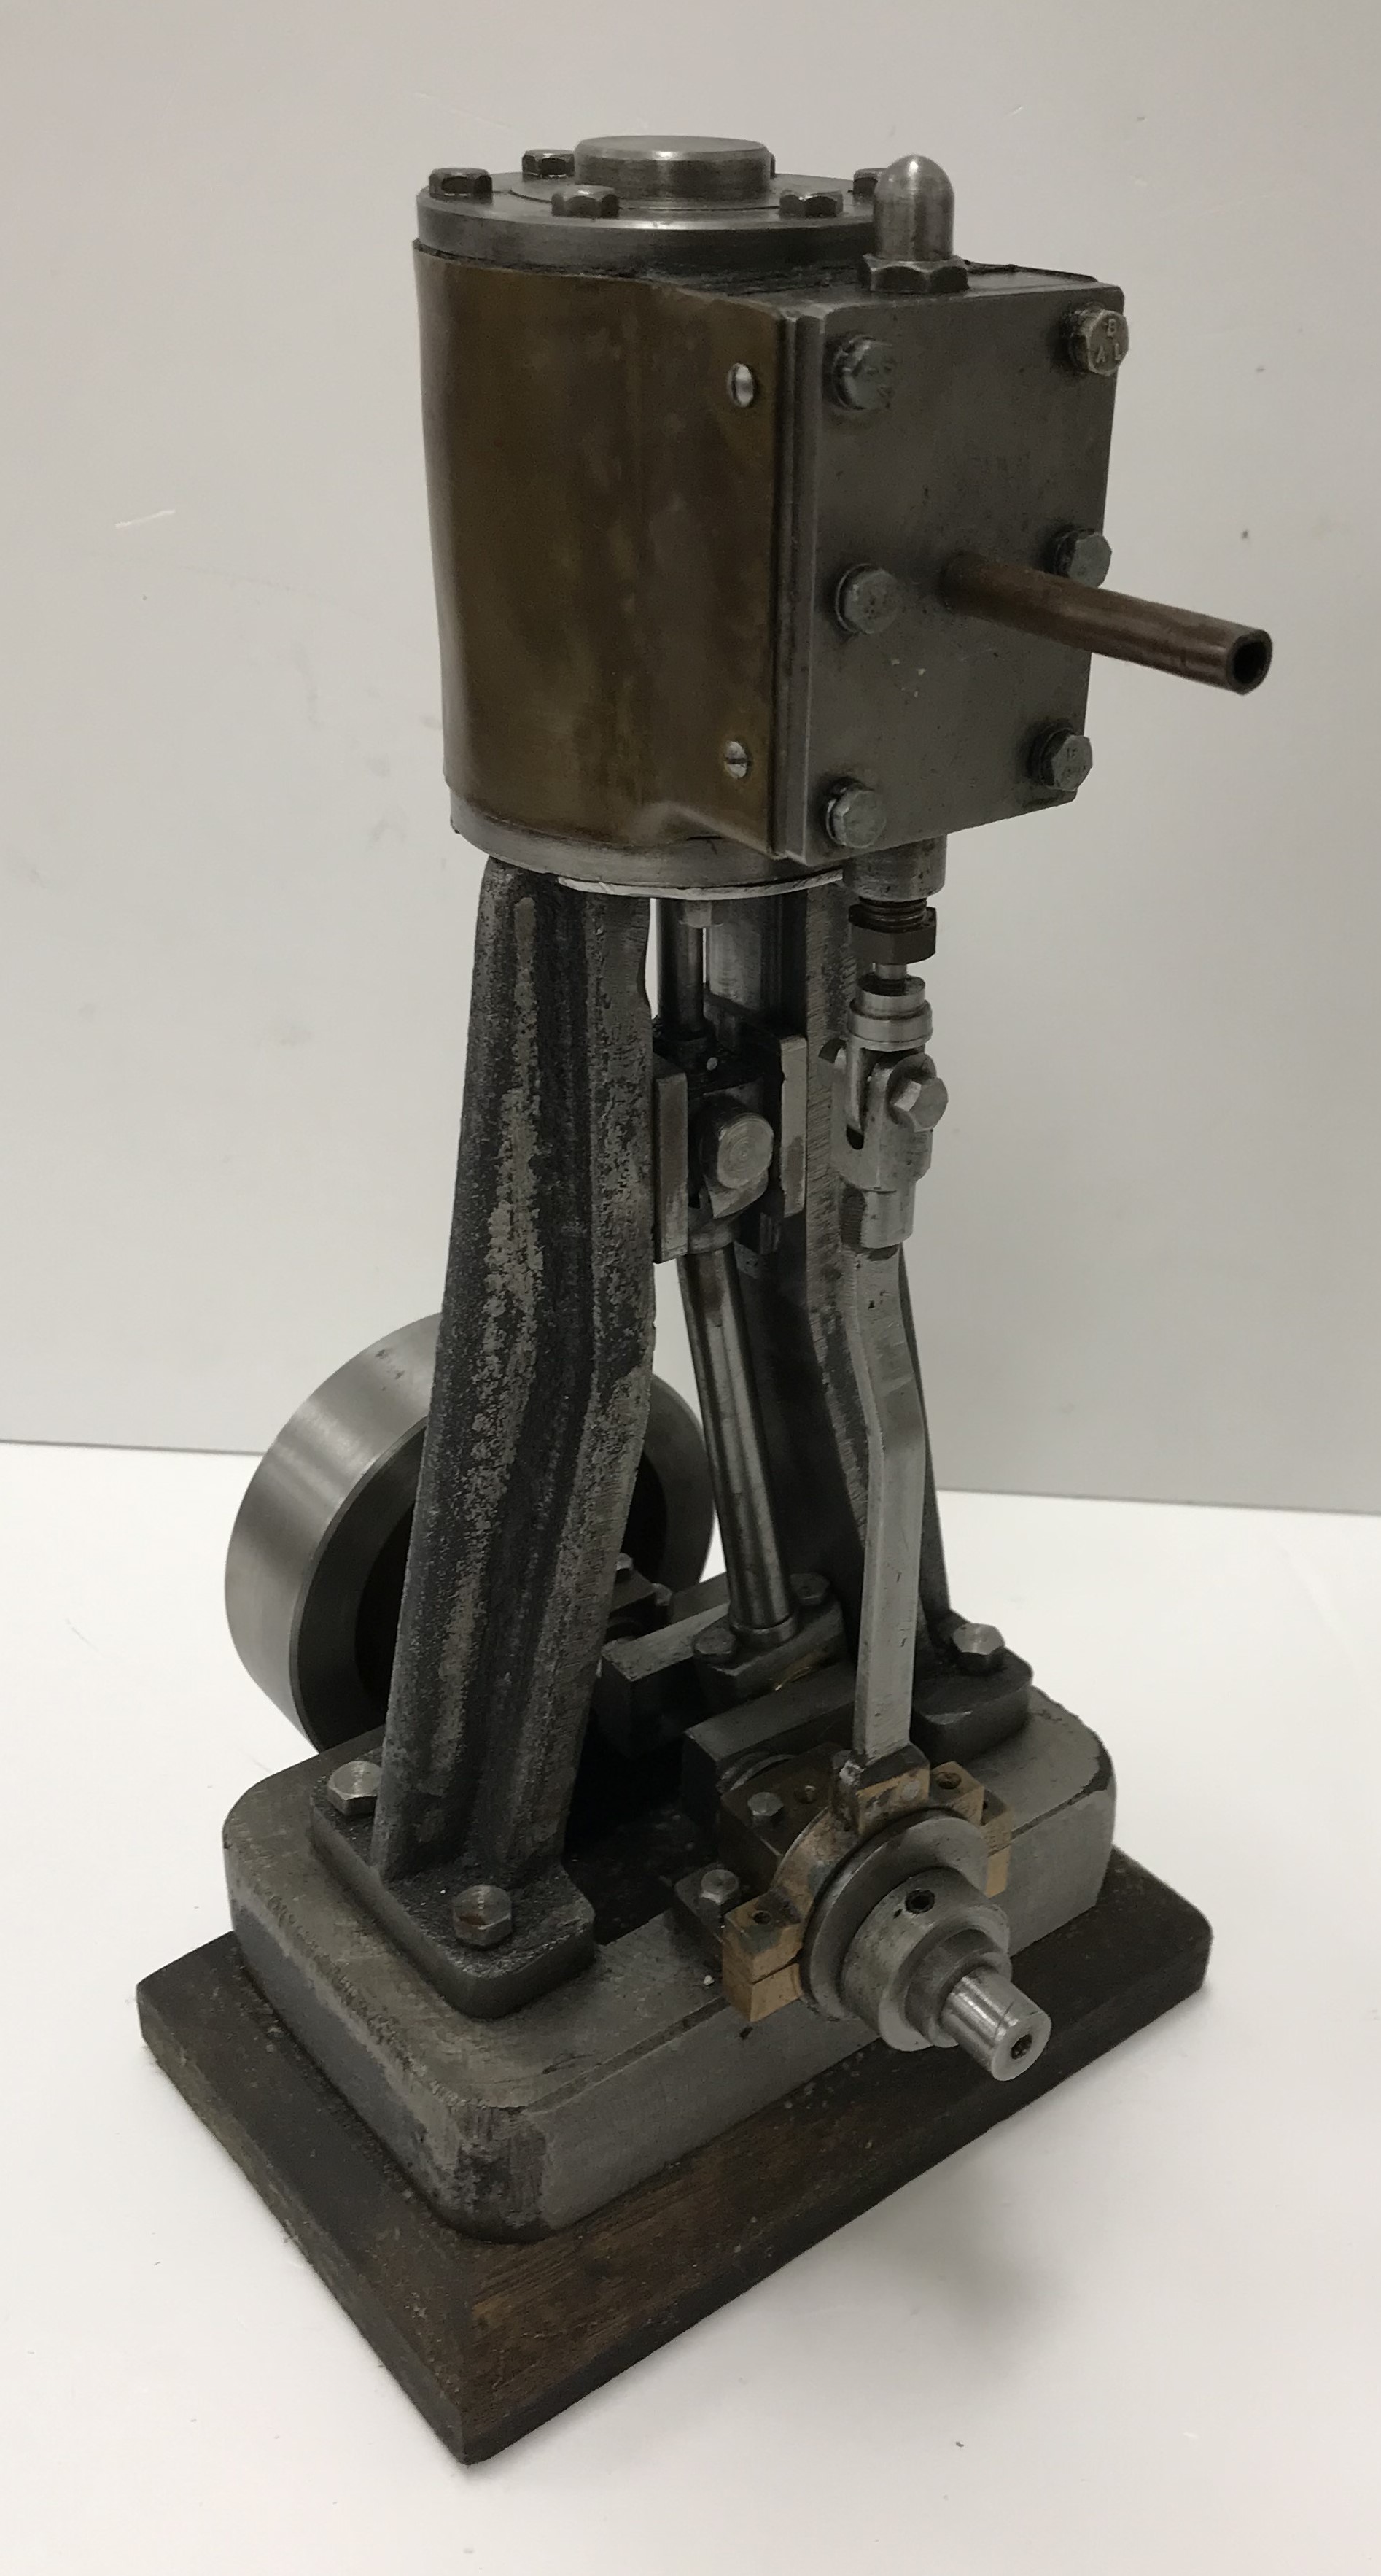 A Stuart Turner type vertical stationary engine,